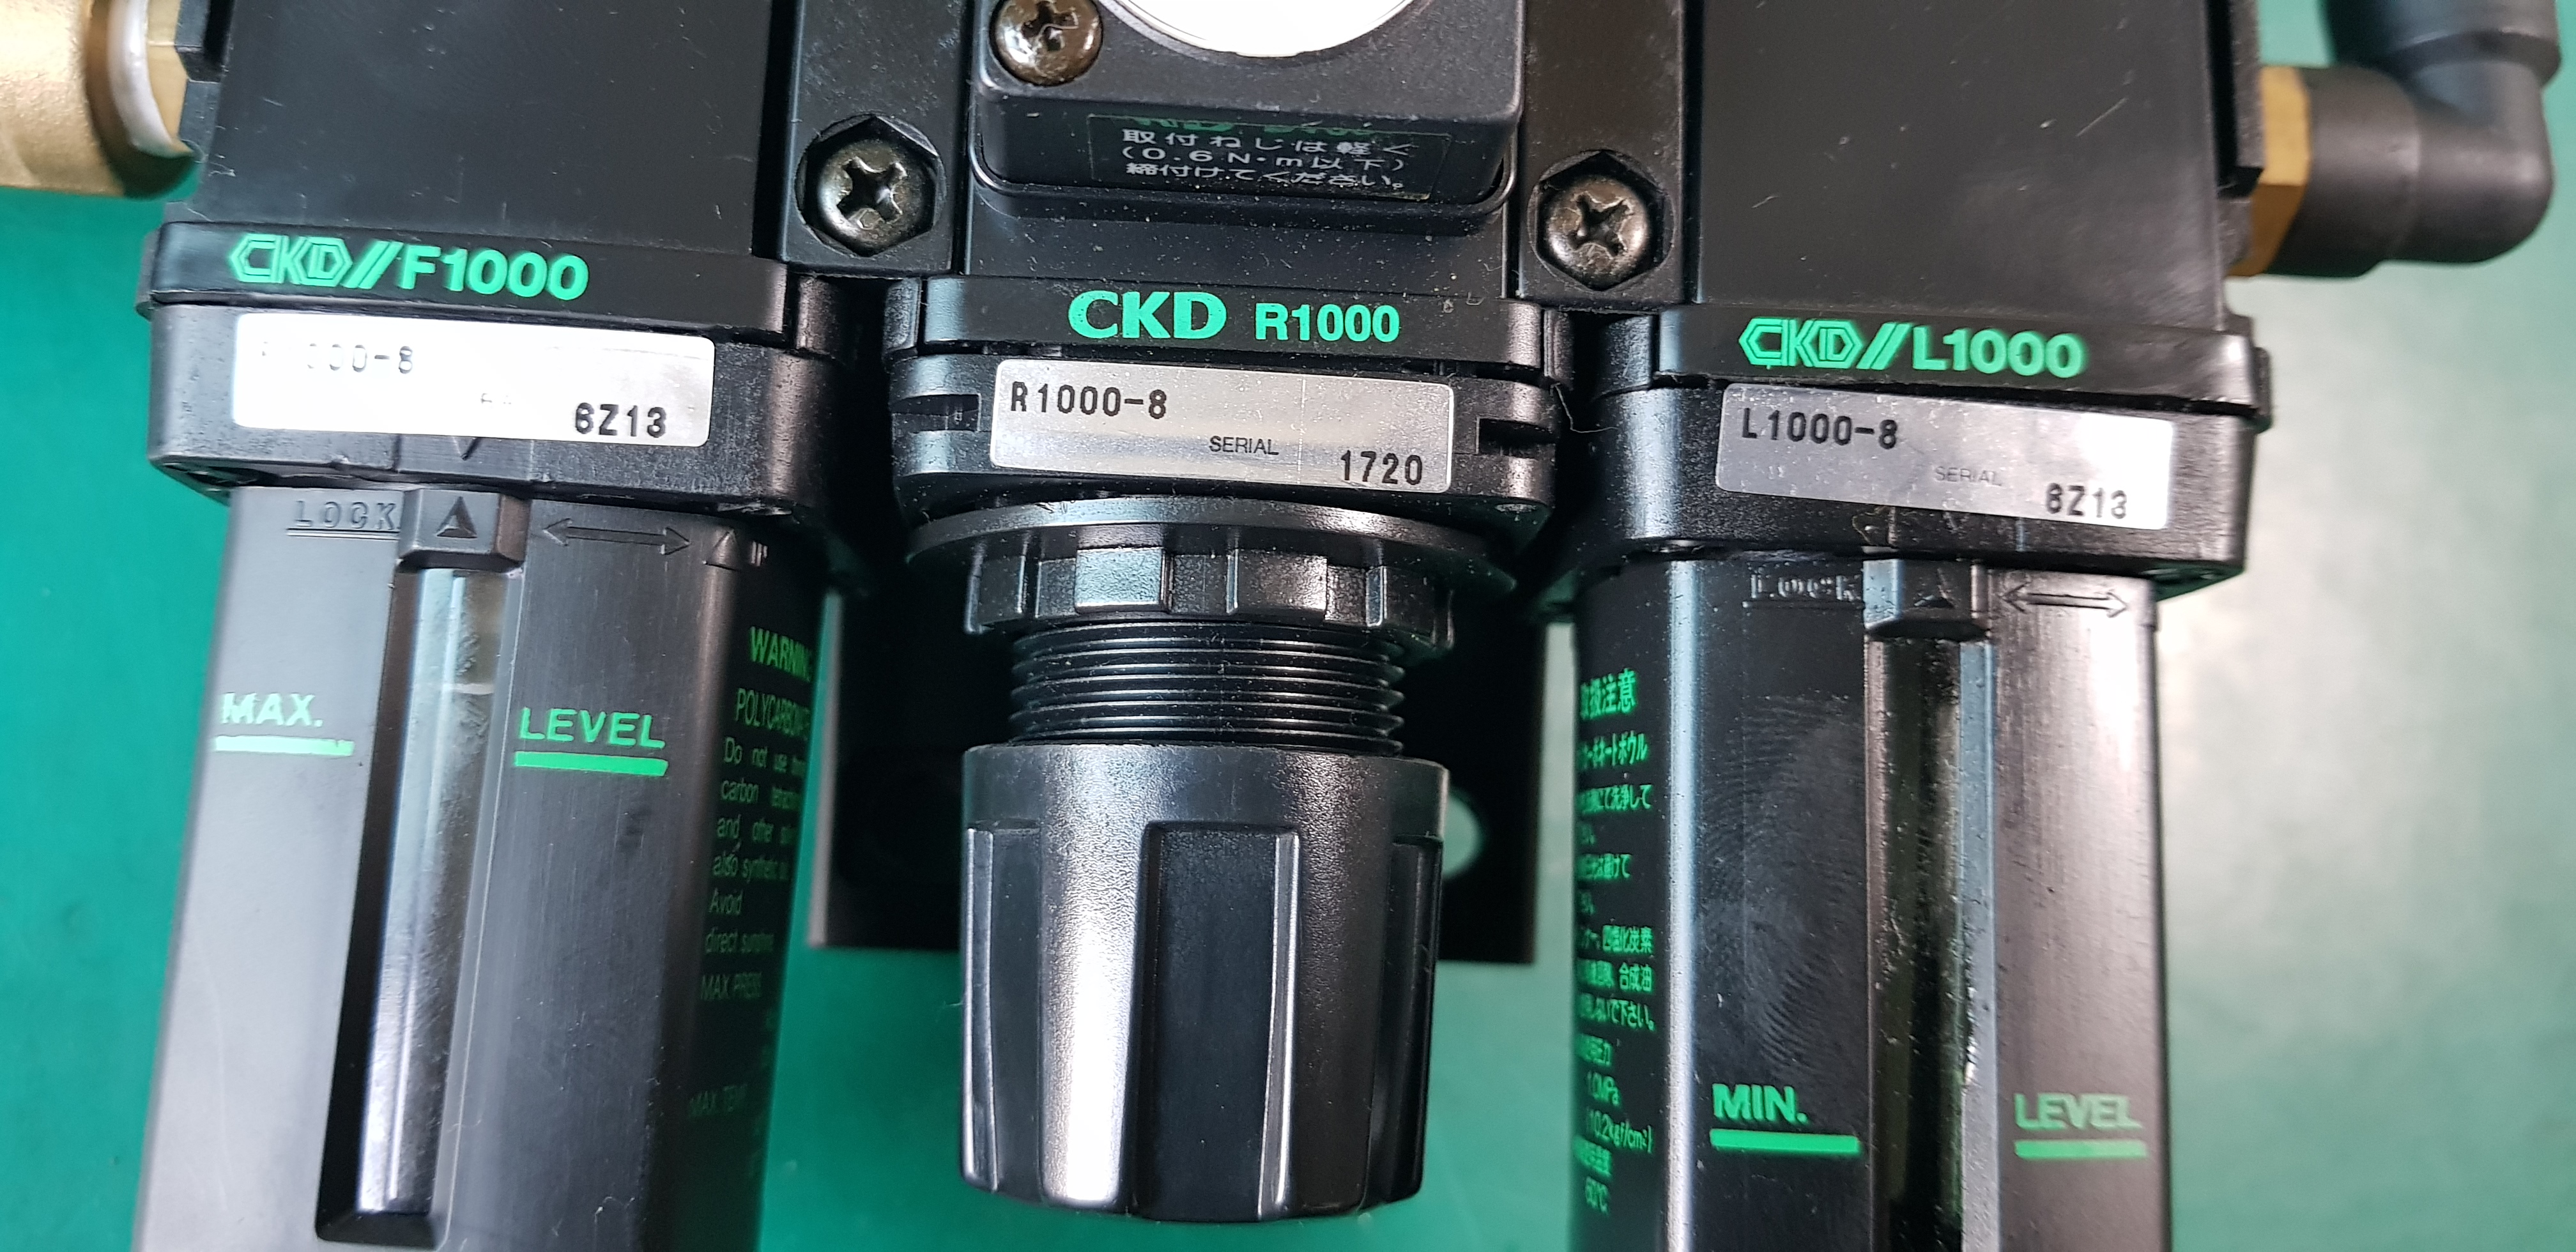 CKD F1000+R1000+L1000 (중고)